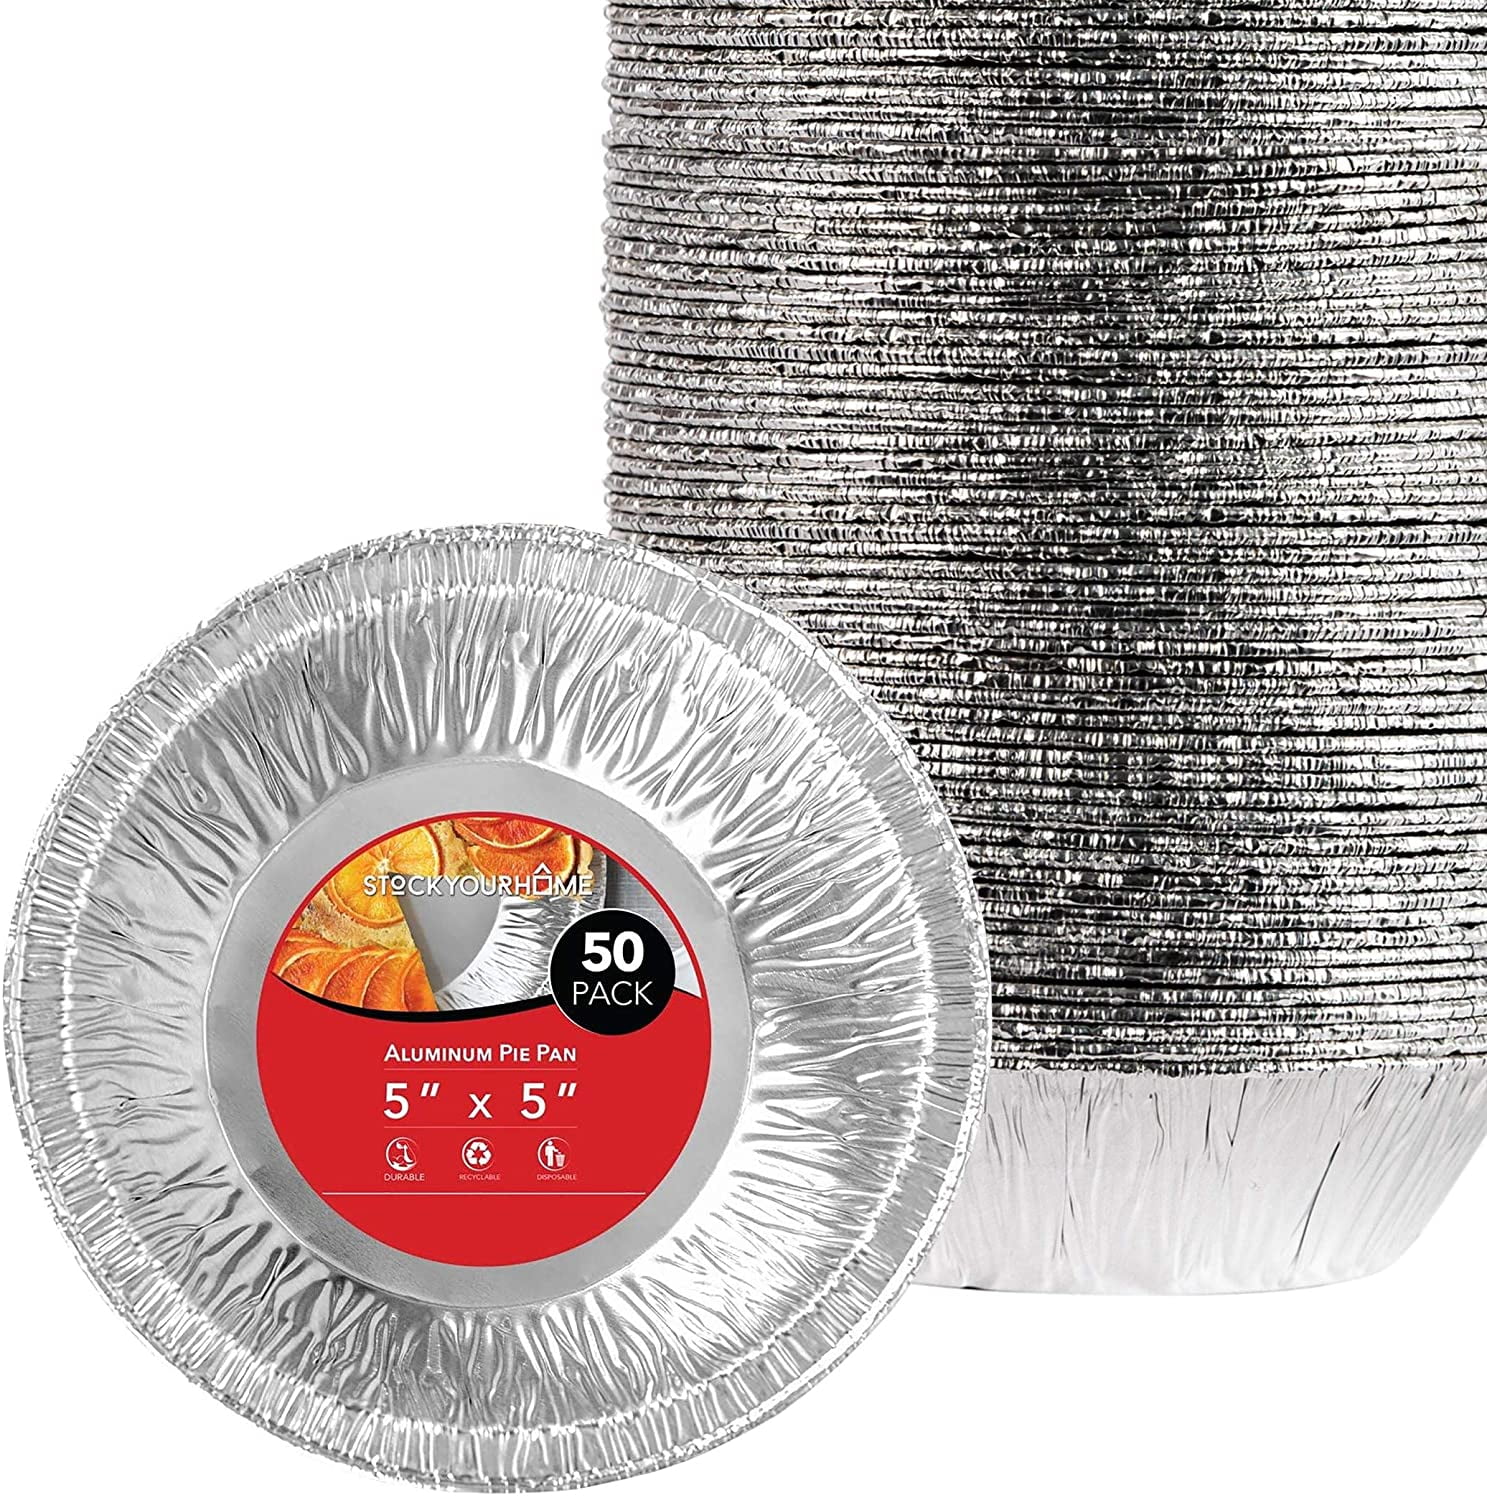 76 x 21MM Food Safe ROUND MINI PIE CUSTARD Aluminium Tin Tray CONTAINER x 100